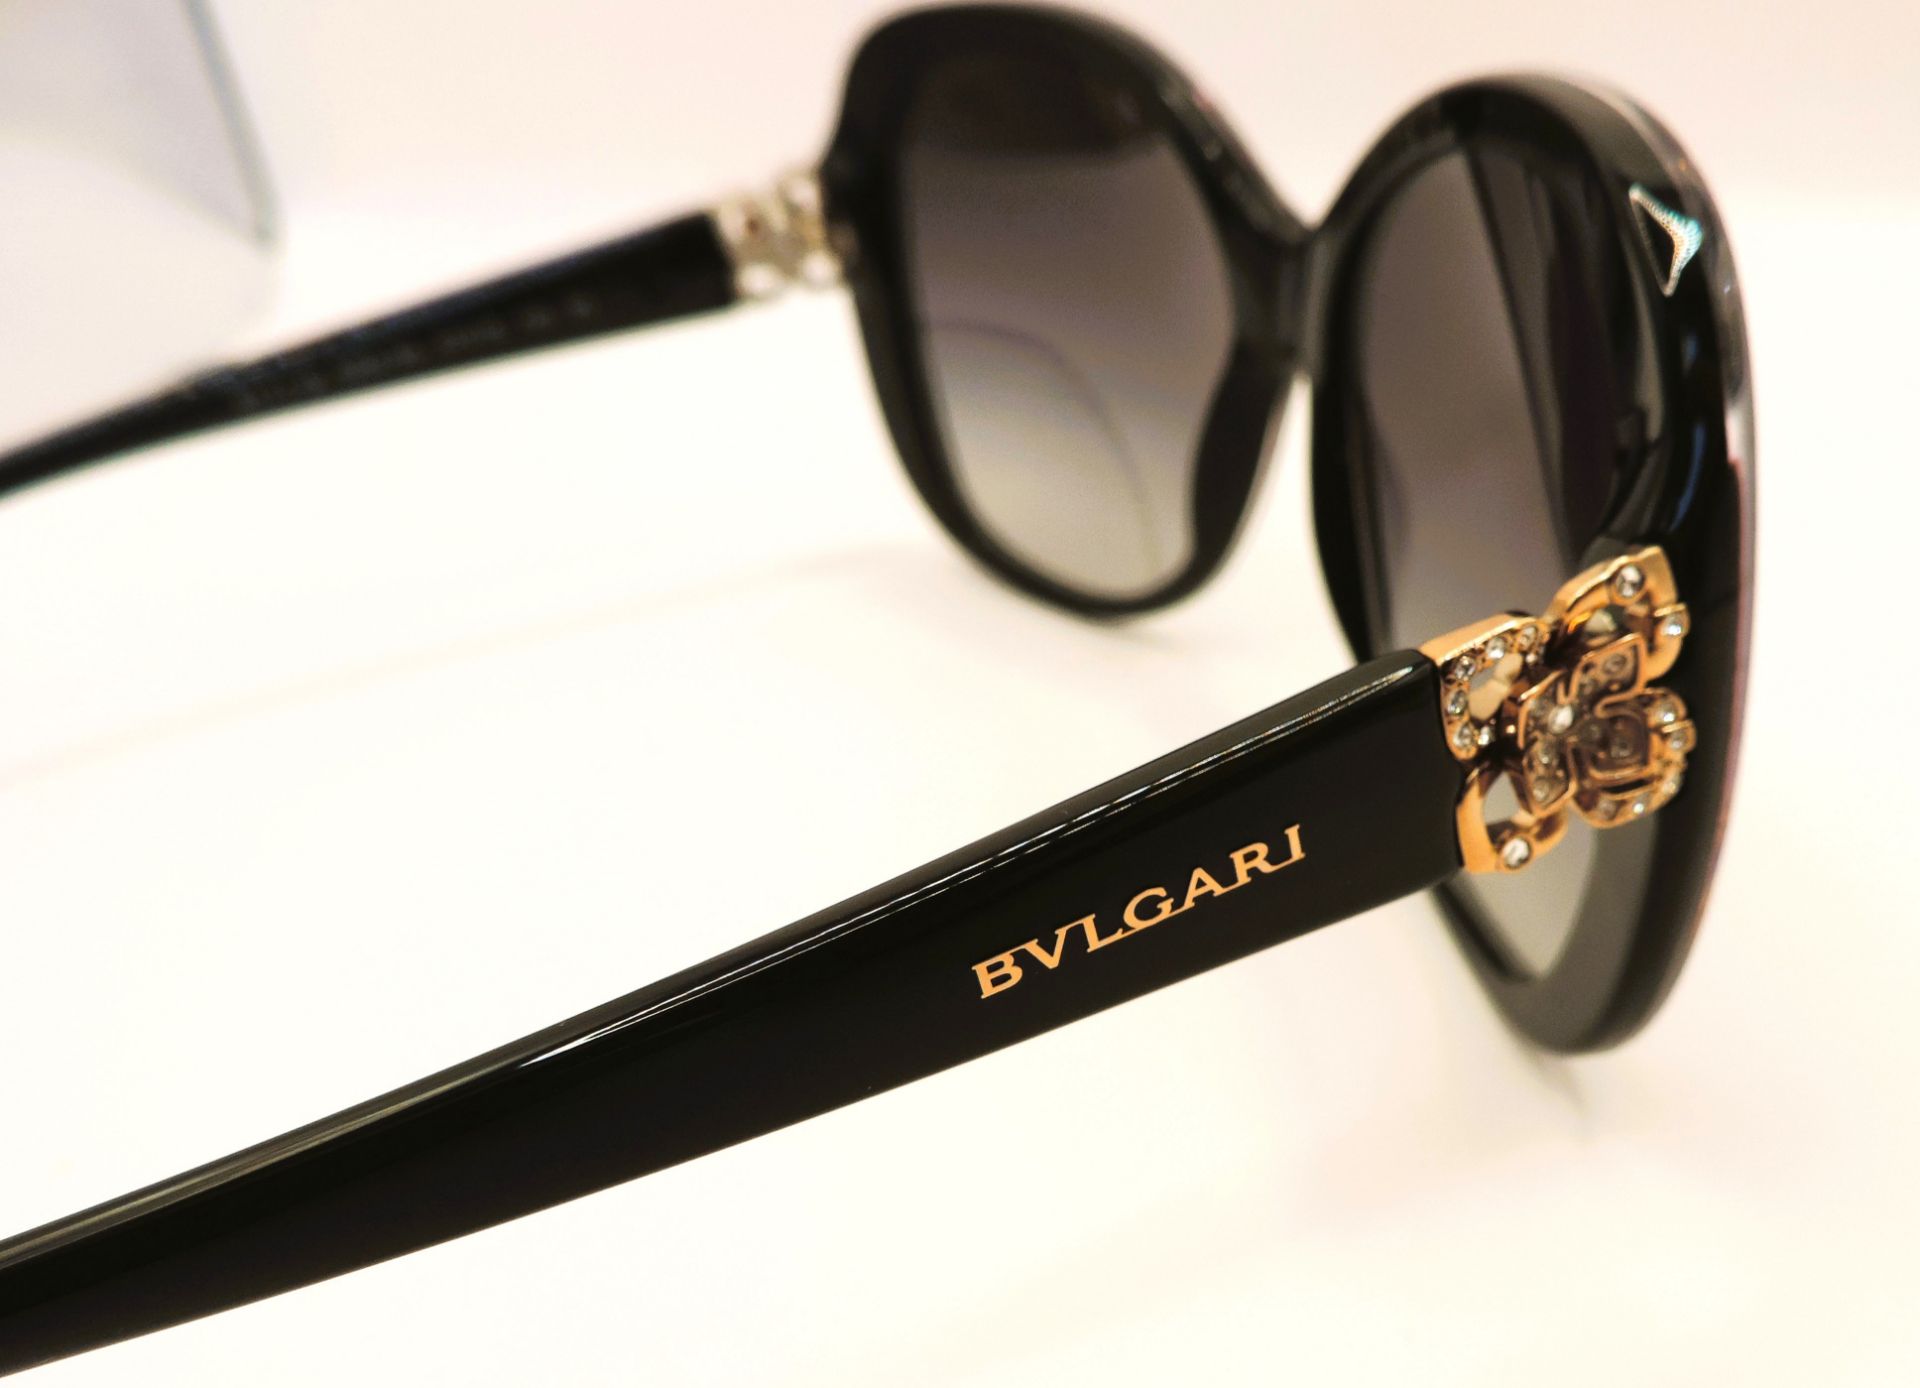 BVLGARI Black Sunglasses 8171-C Jewelled Hinged Detail New With Box & Certificate - Image 15 of 17